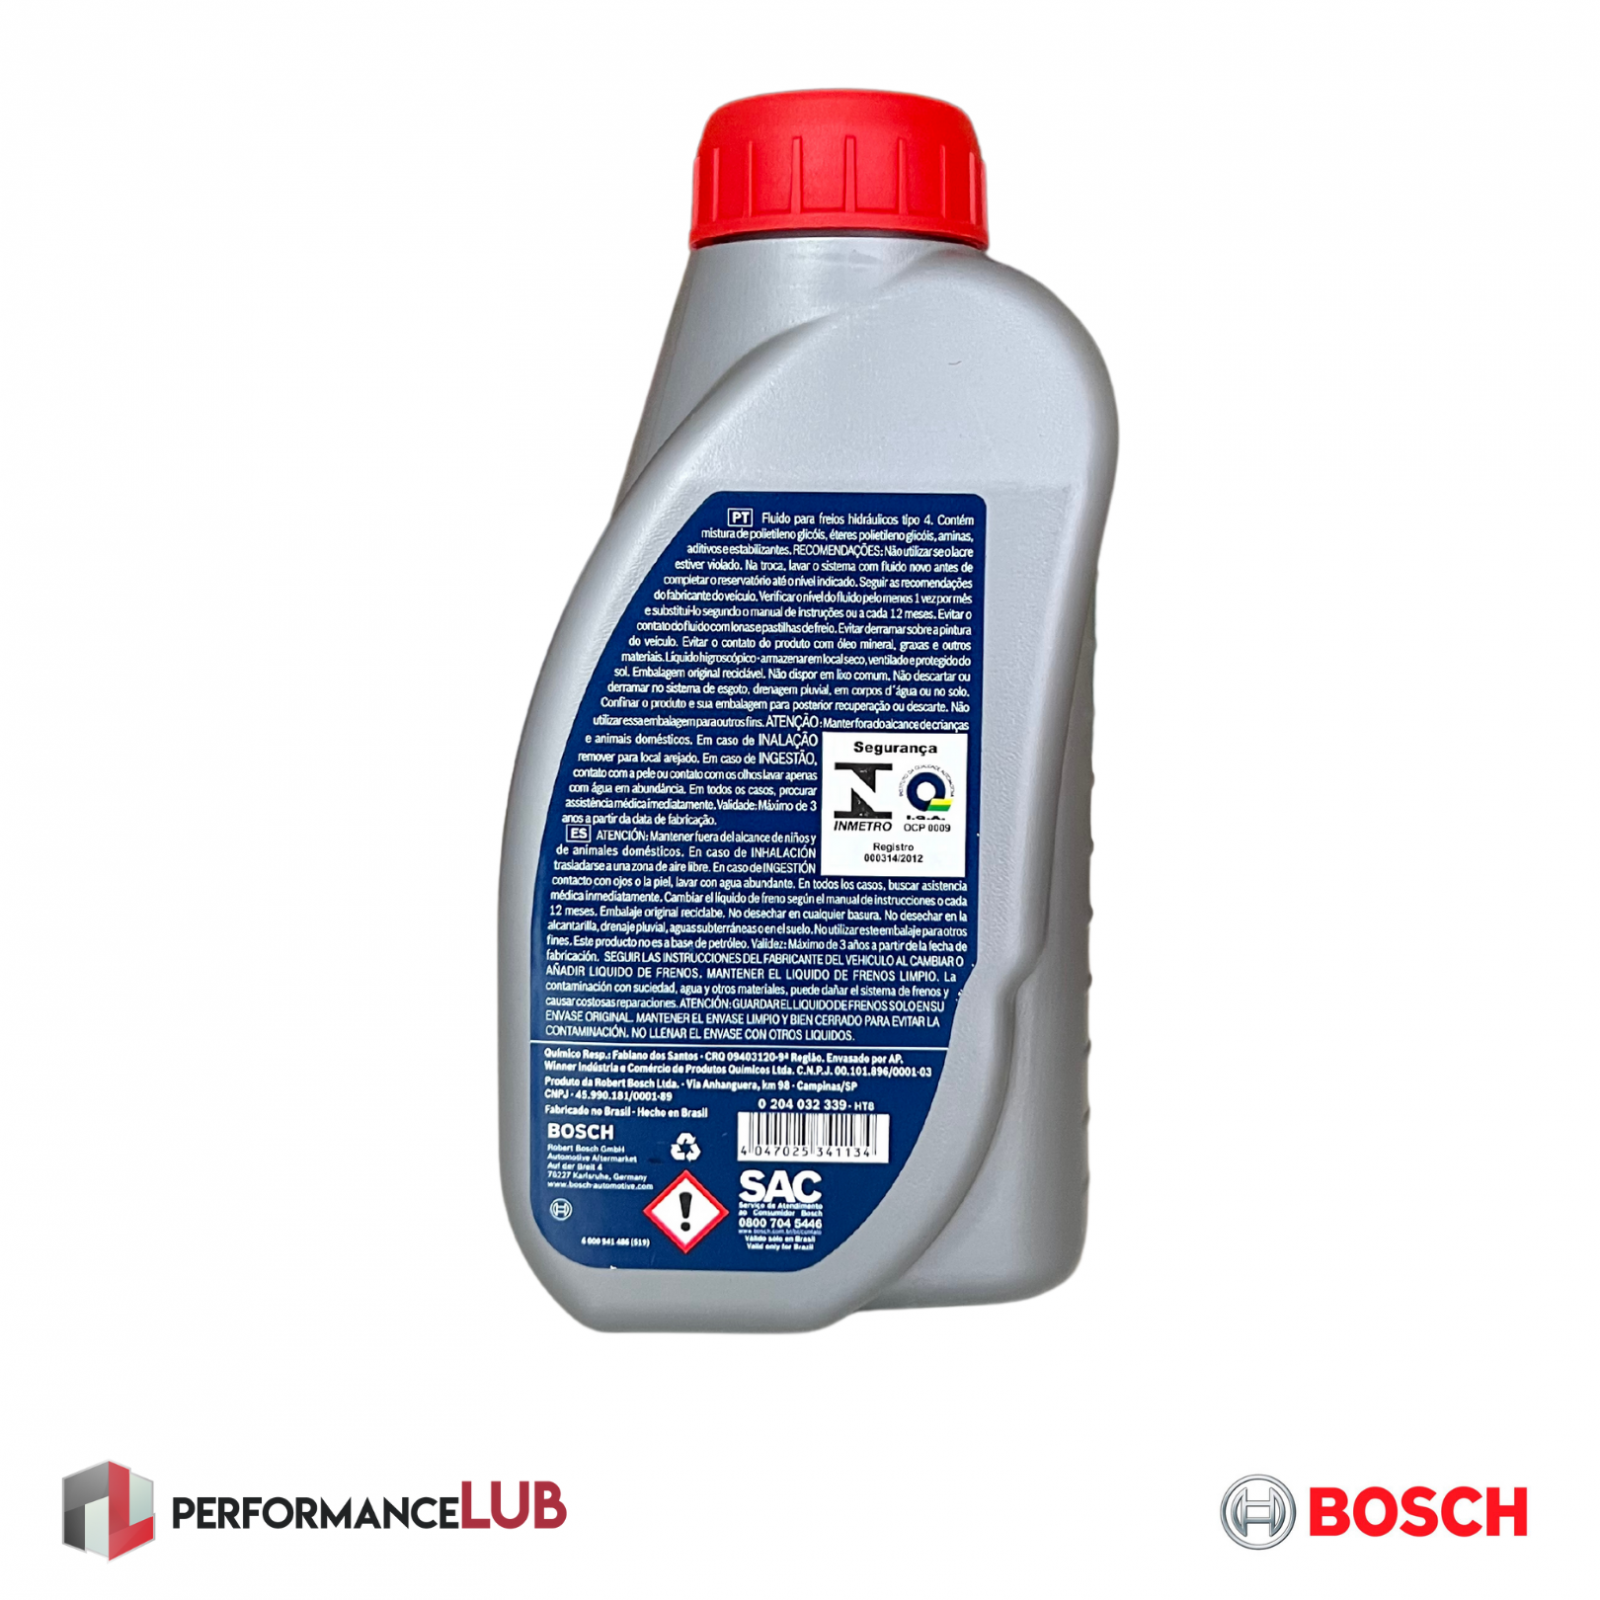 Bosch Fluido de Freio DOT 4 - 500 ml - PerformanceLUB Lubrificantes Premium